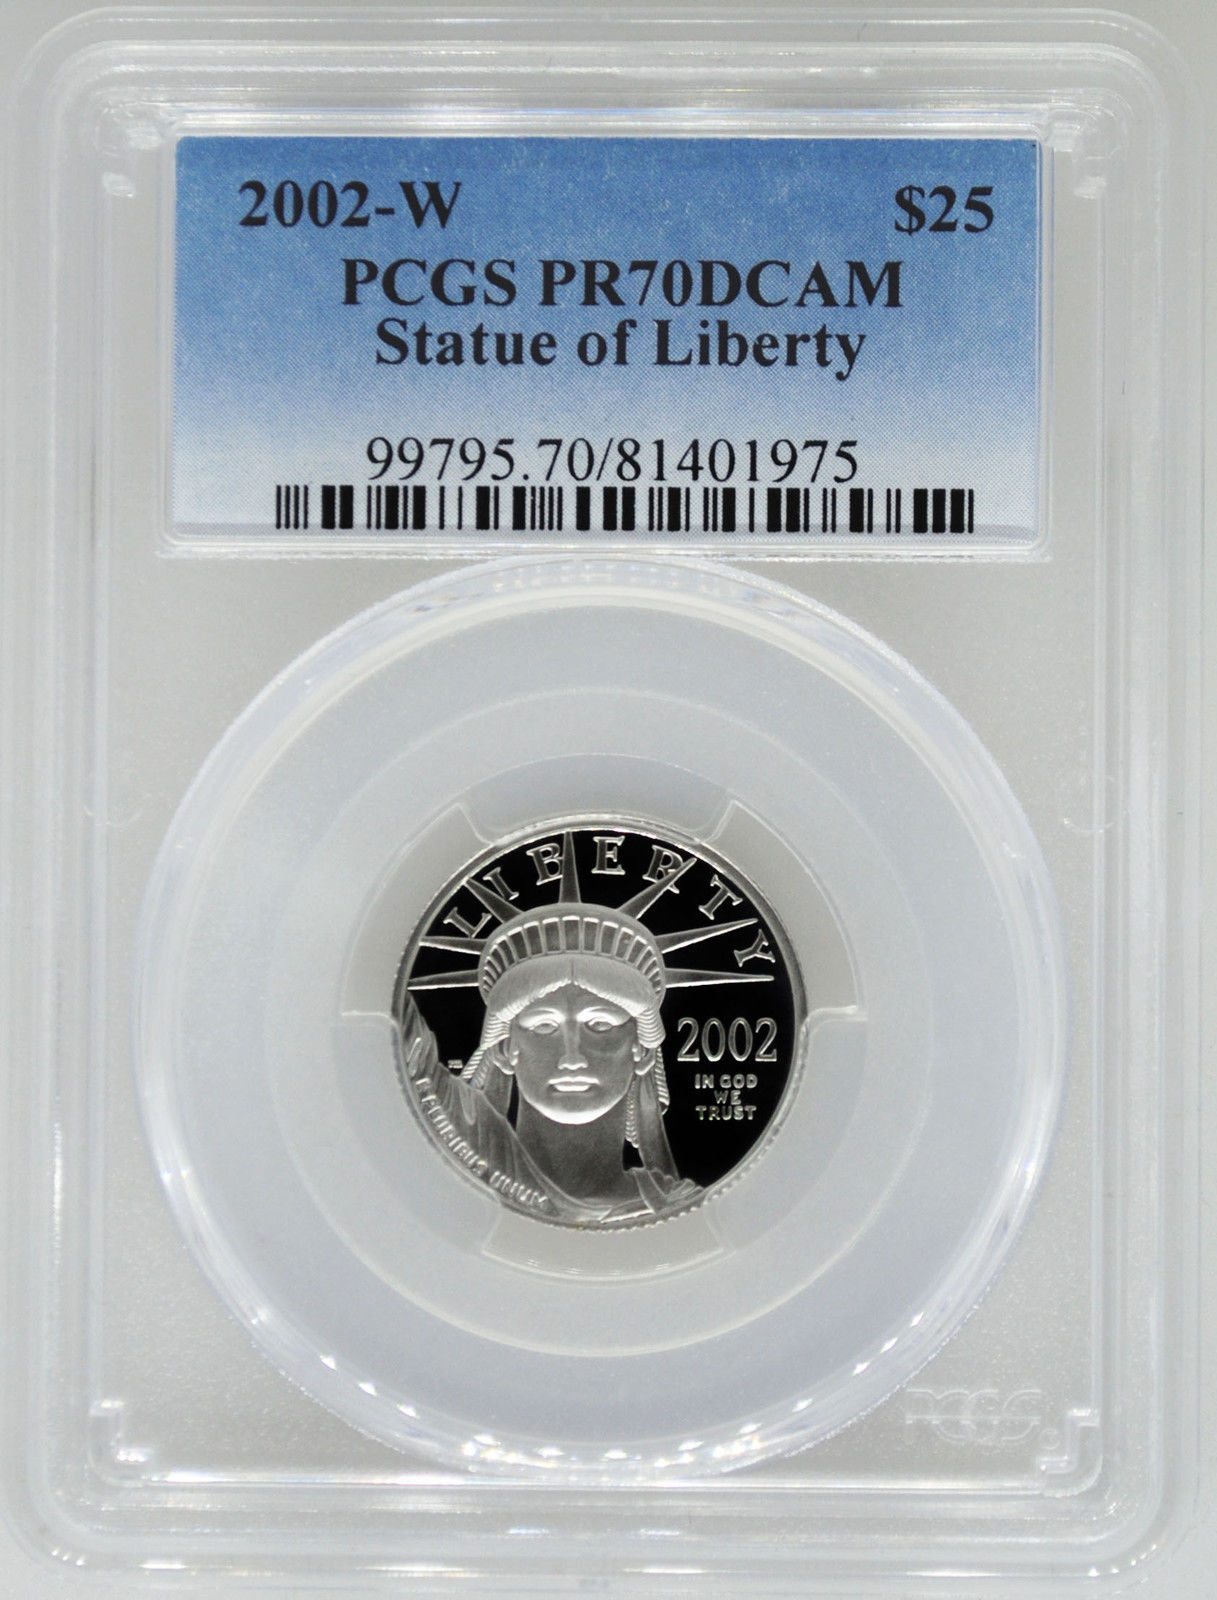 2002-W PCGS PR70 1/4 oz Proof Platinum Eagle $25